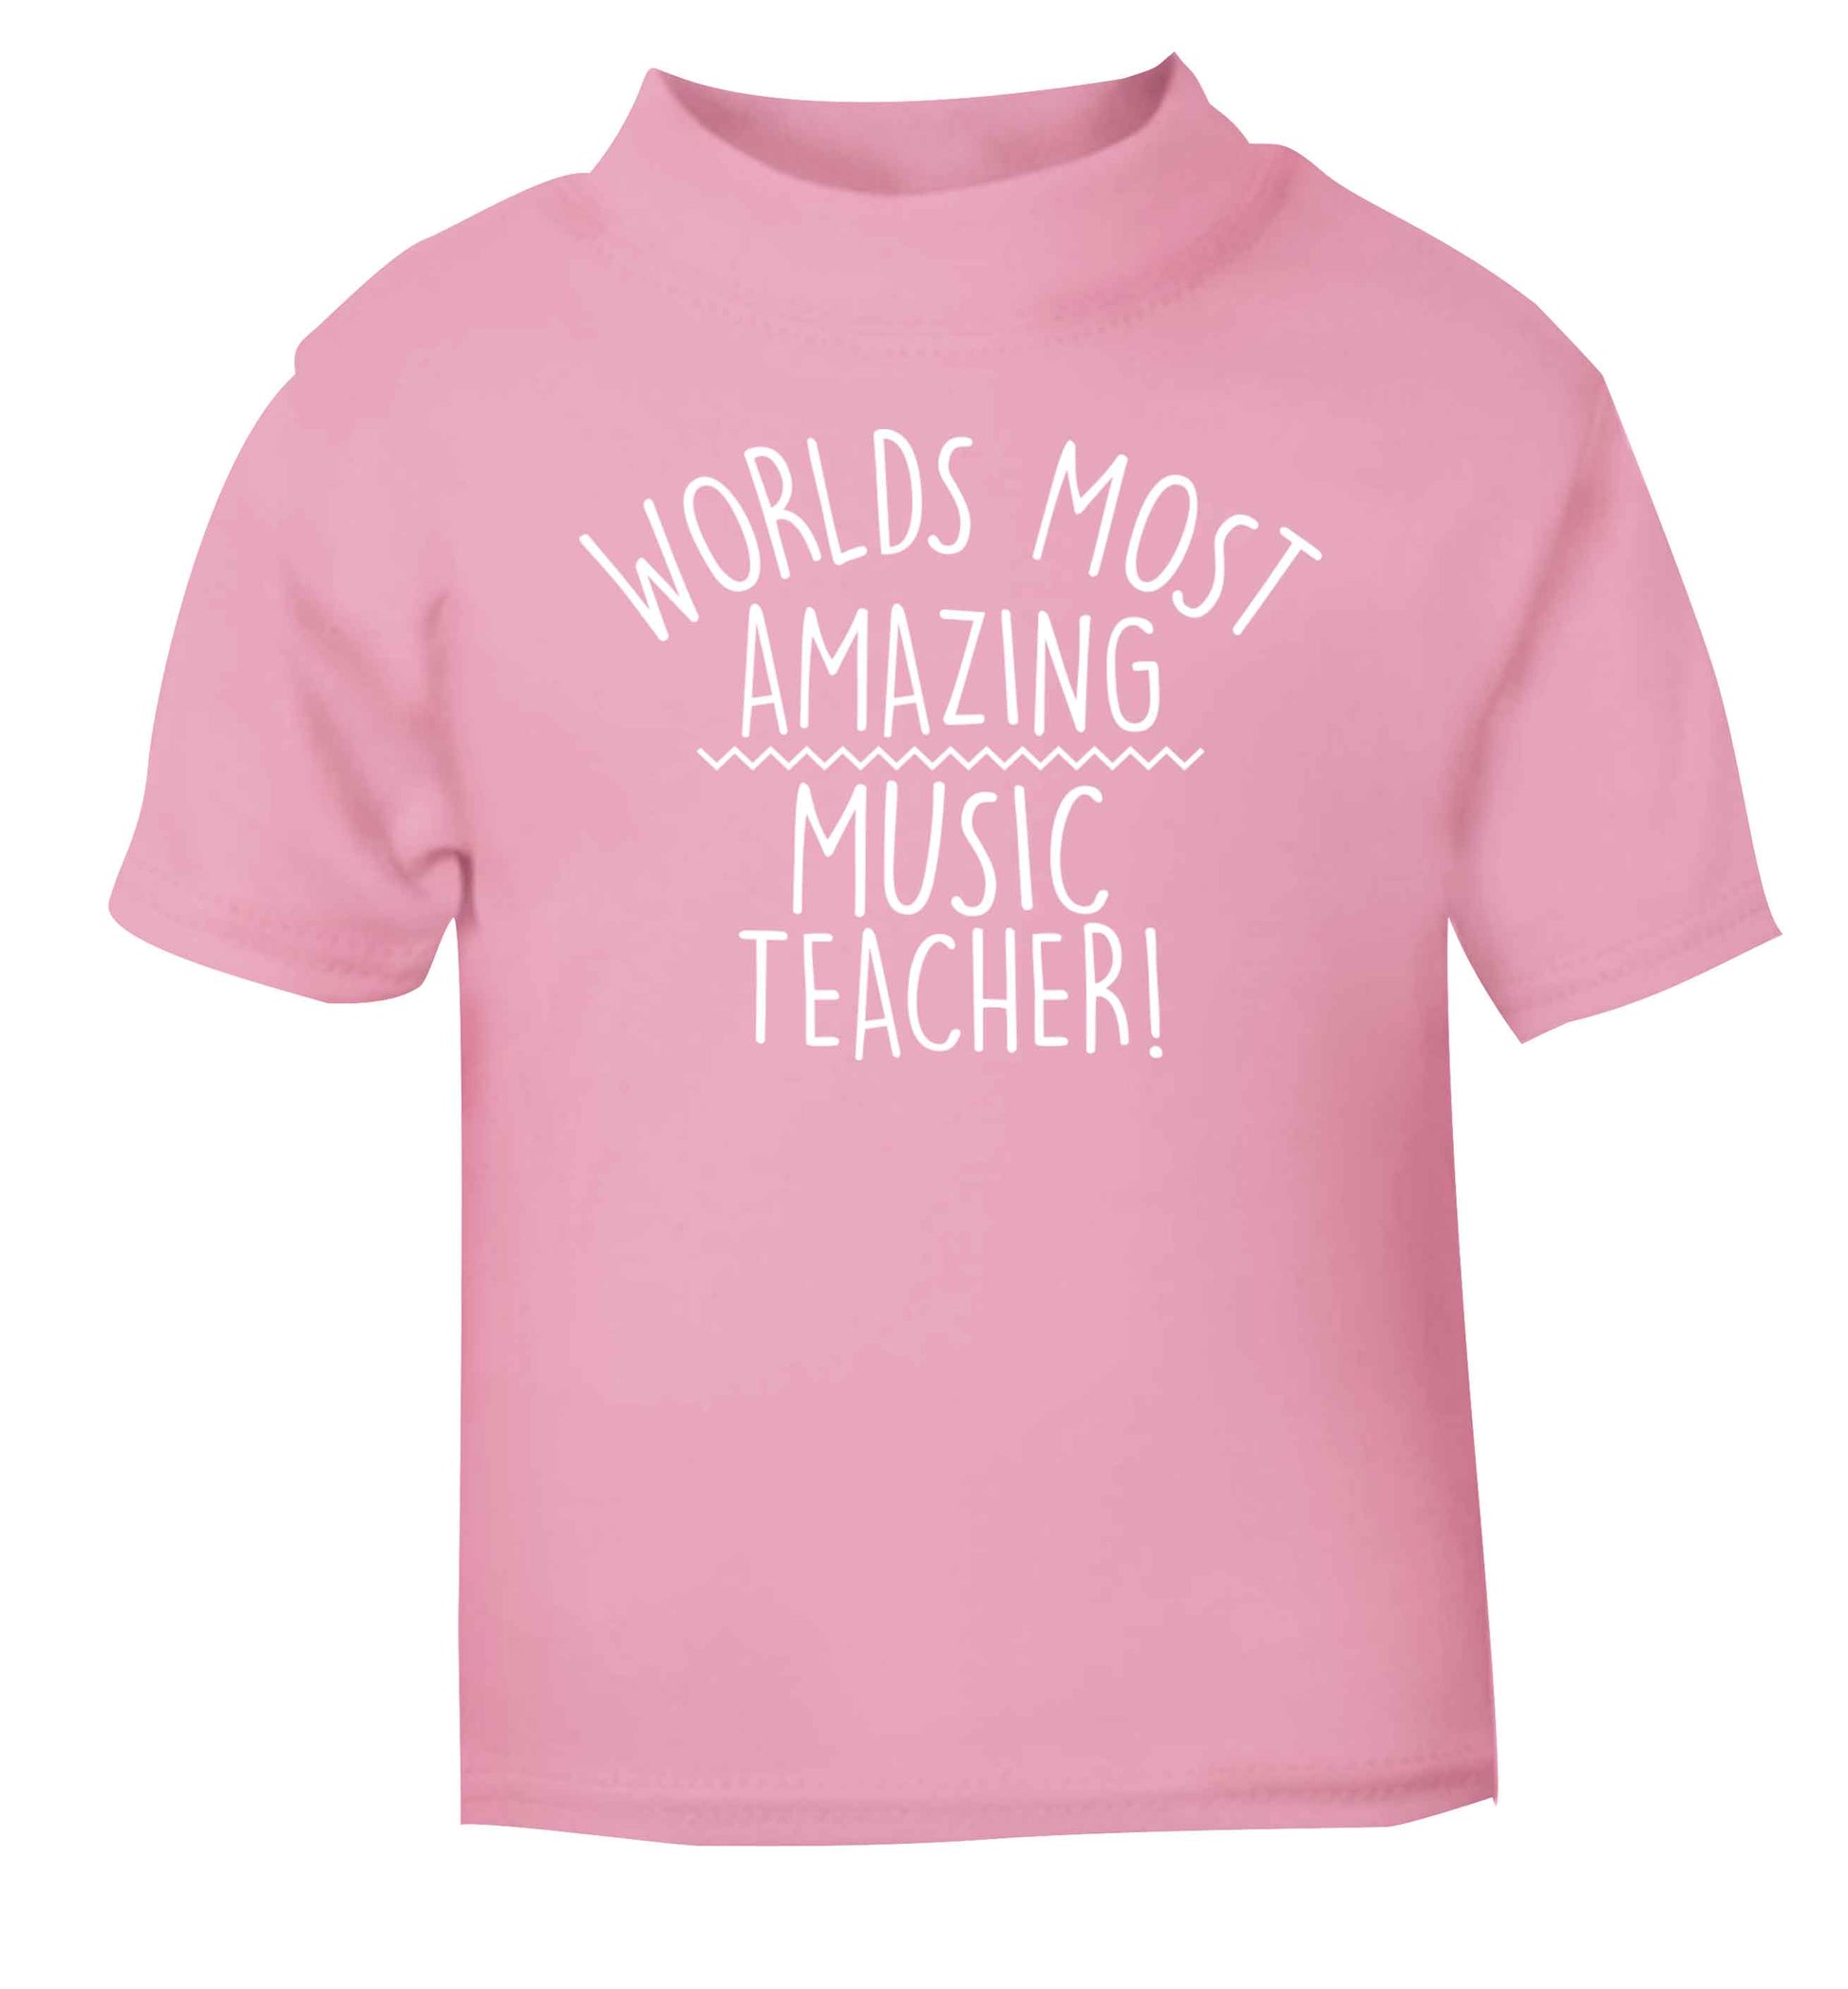 Worlds most amazing music teacher light pink baby toddler Tshirt 2 Years